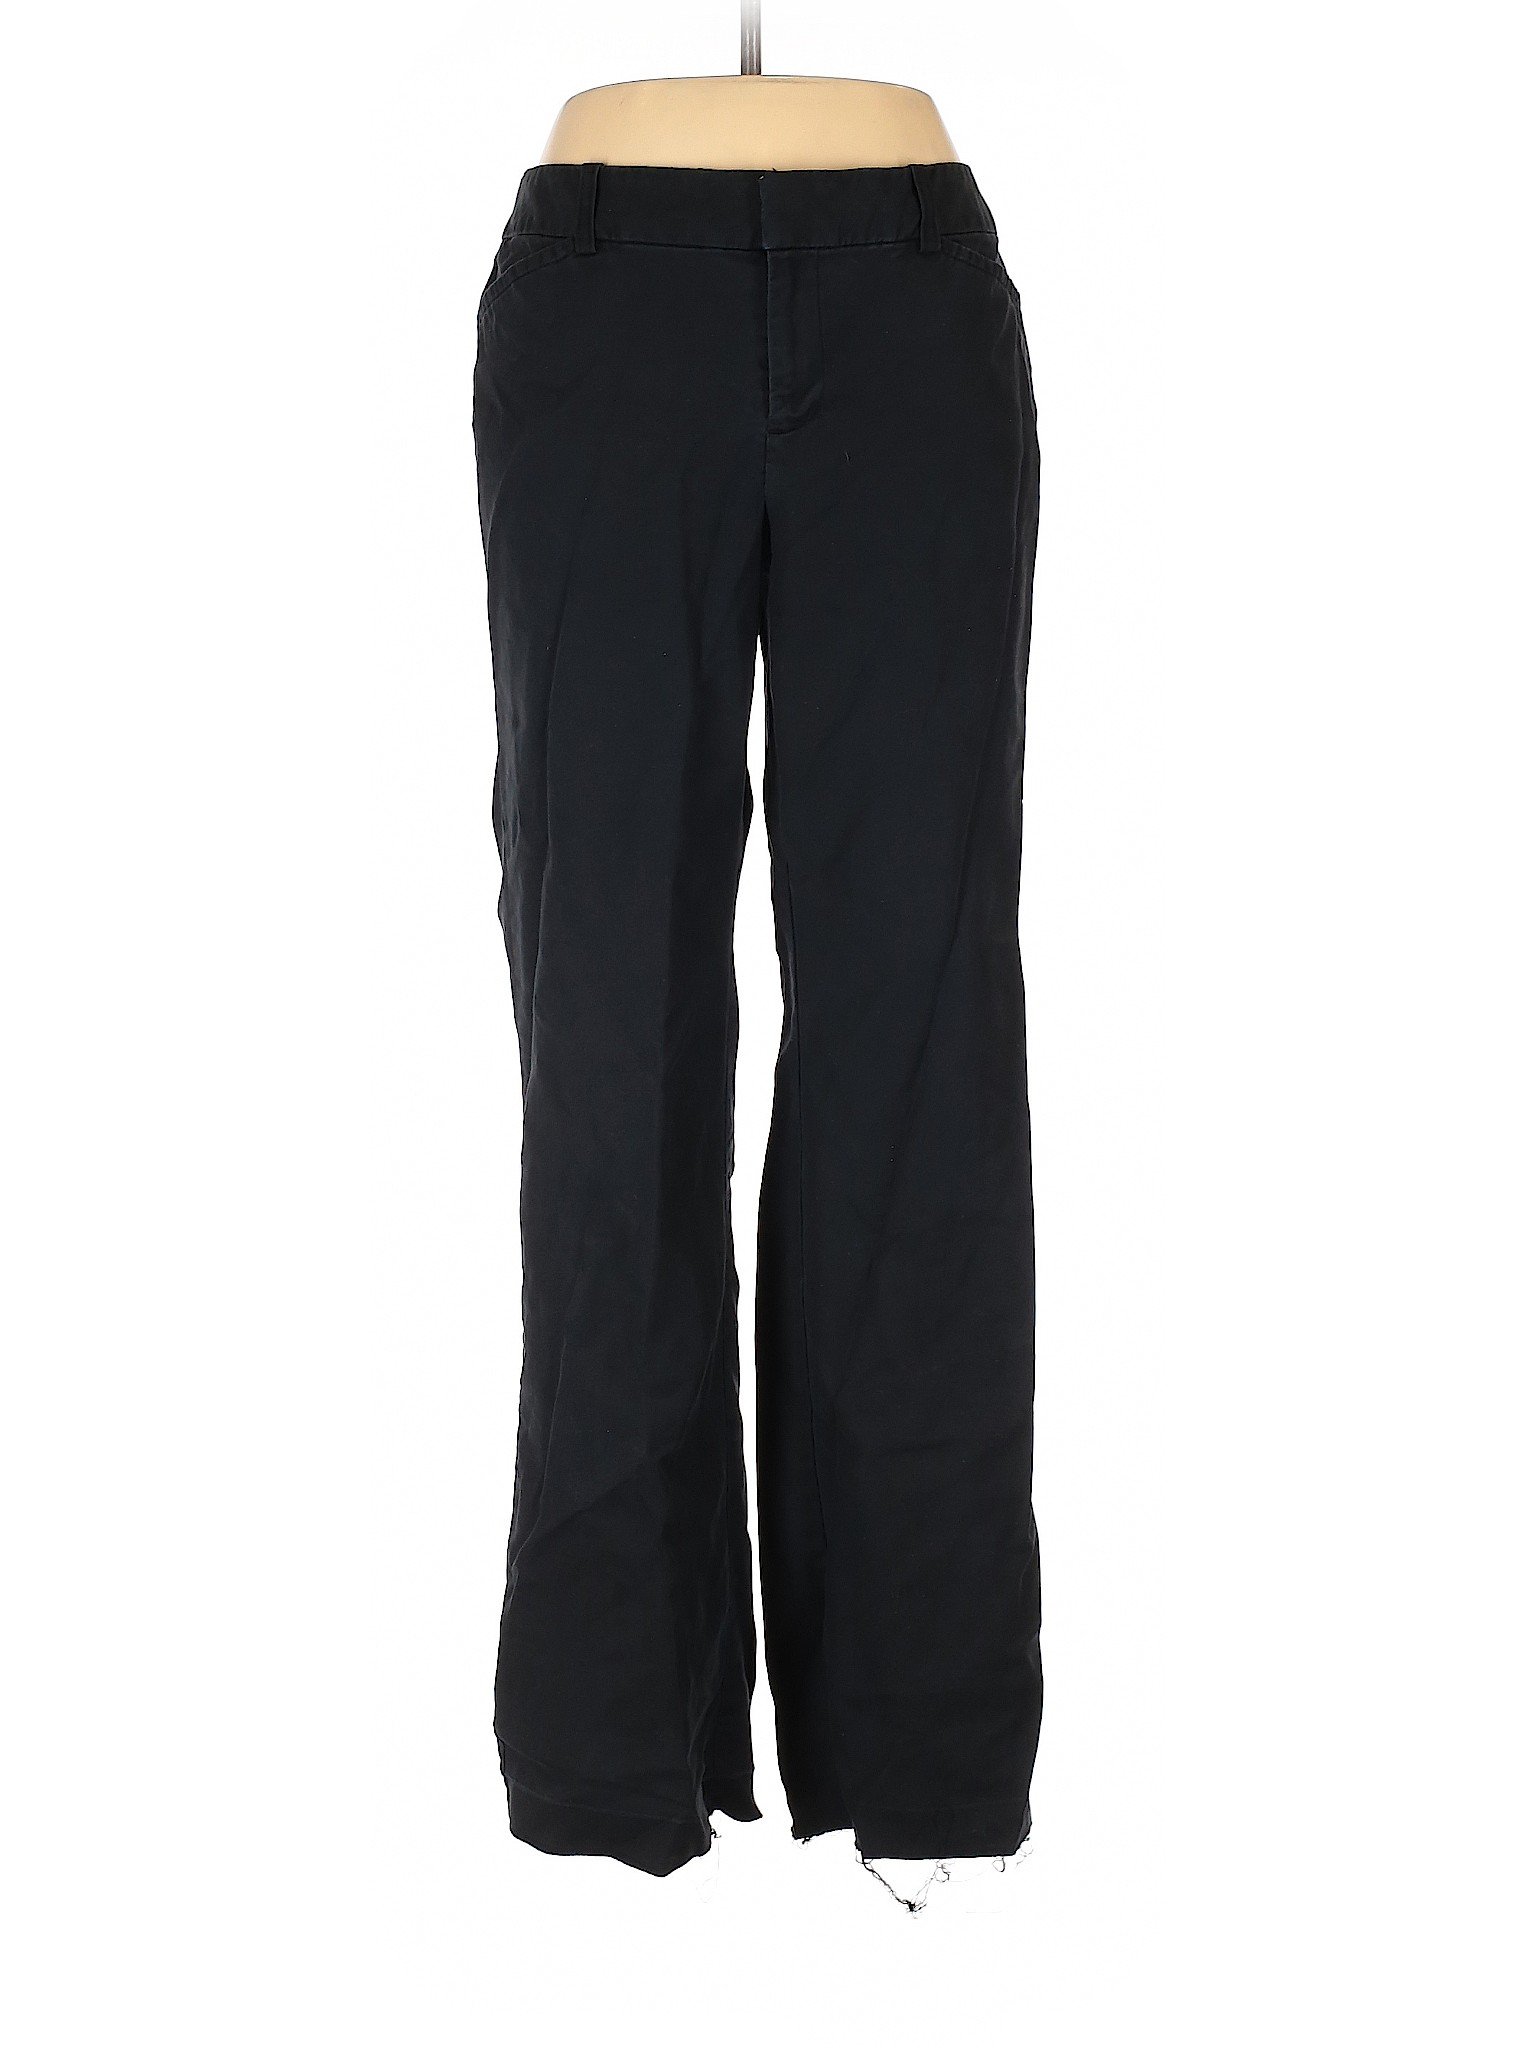 Merona Women Black Casual Pants 12 | eBay